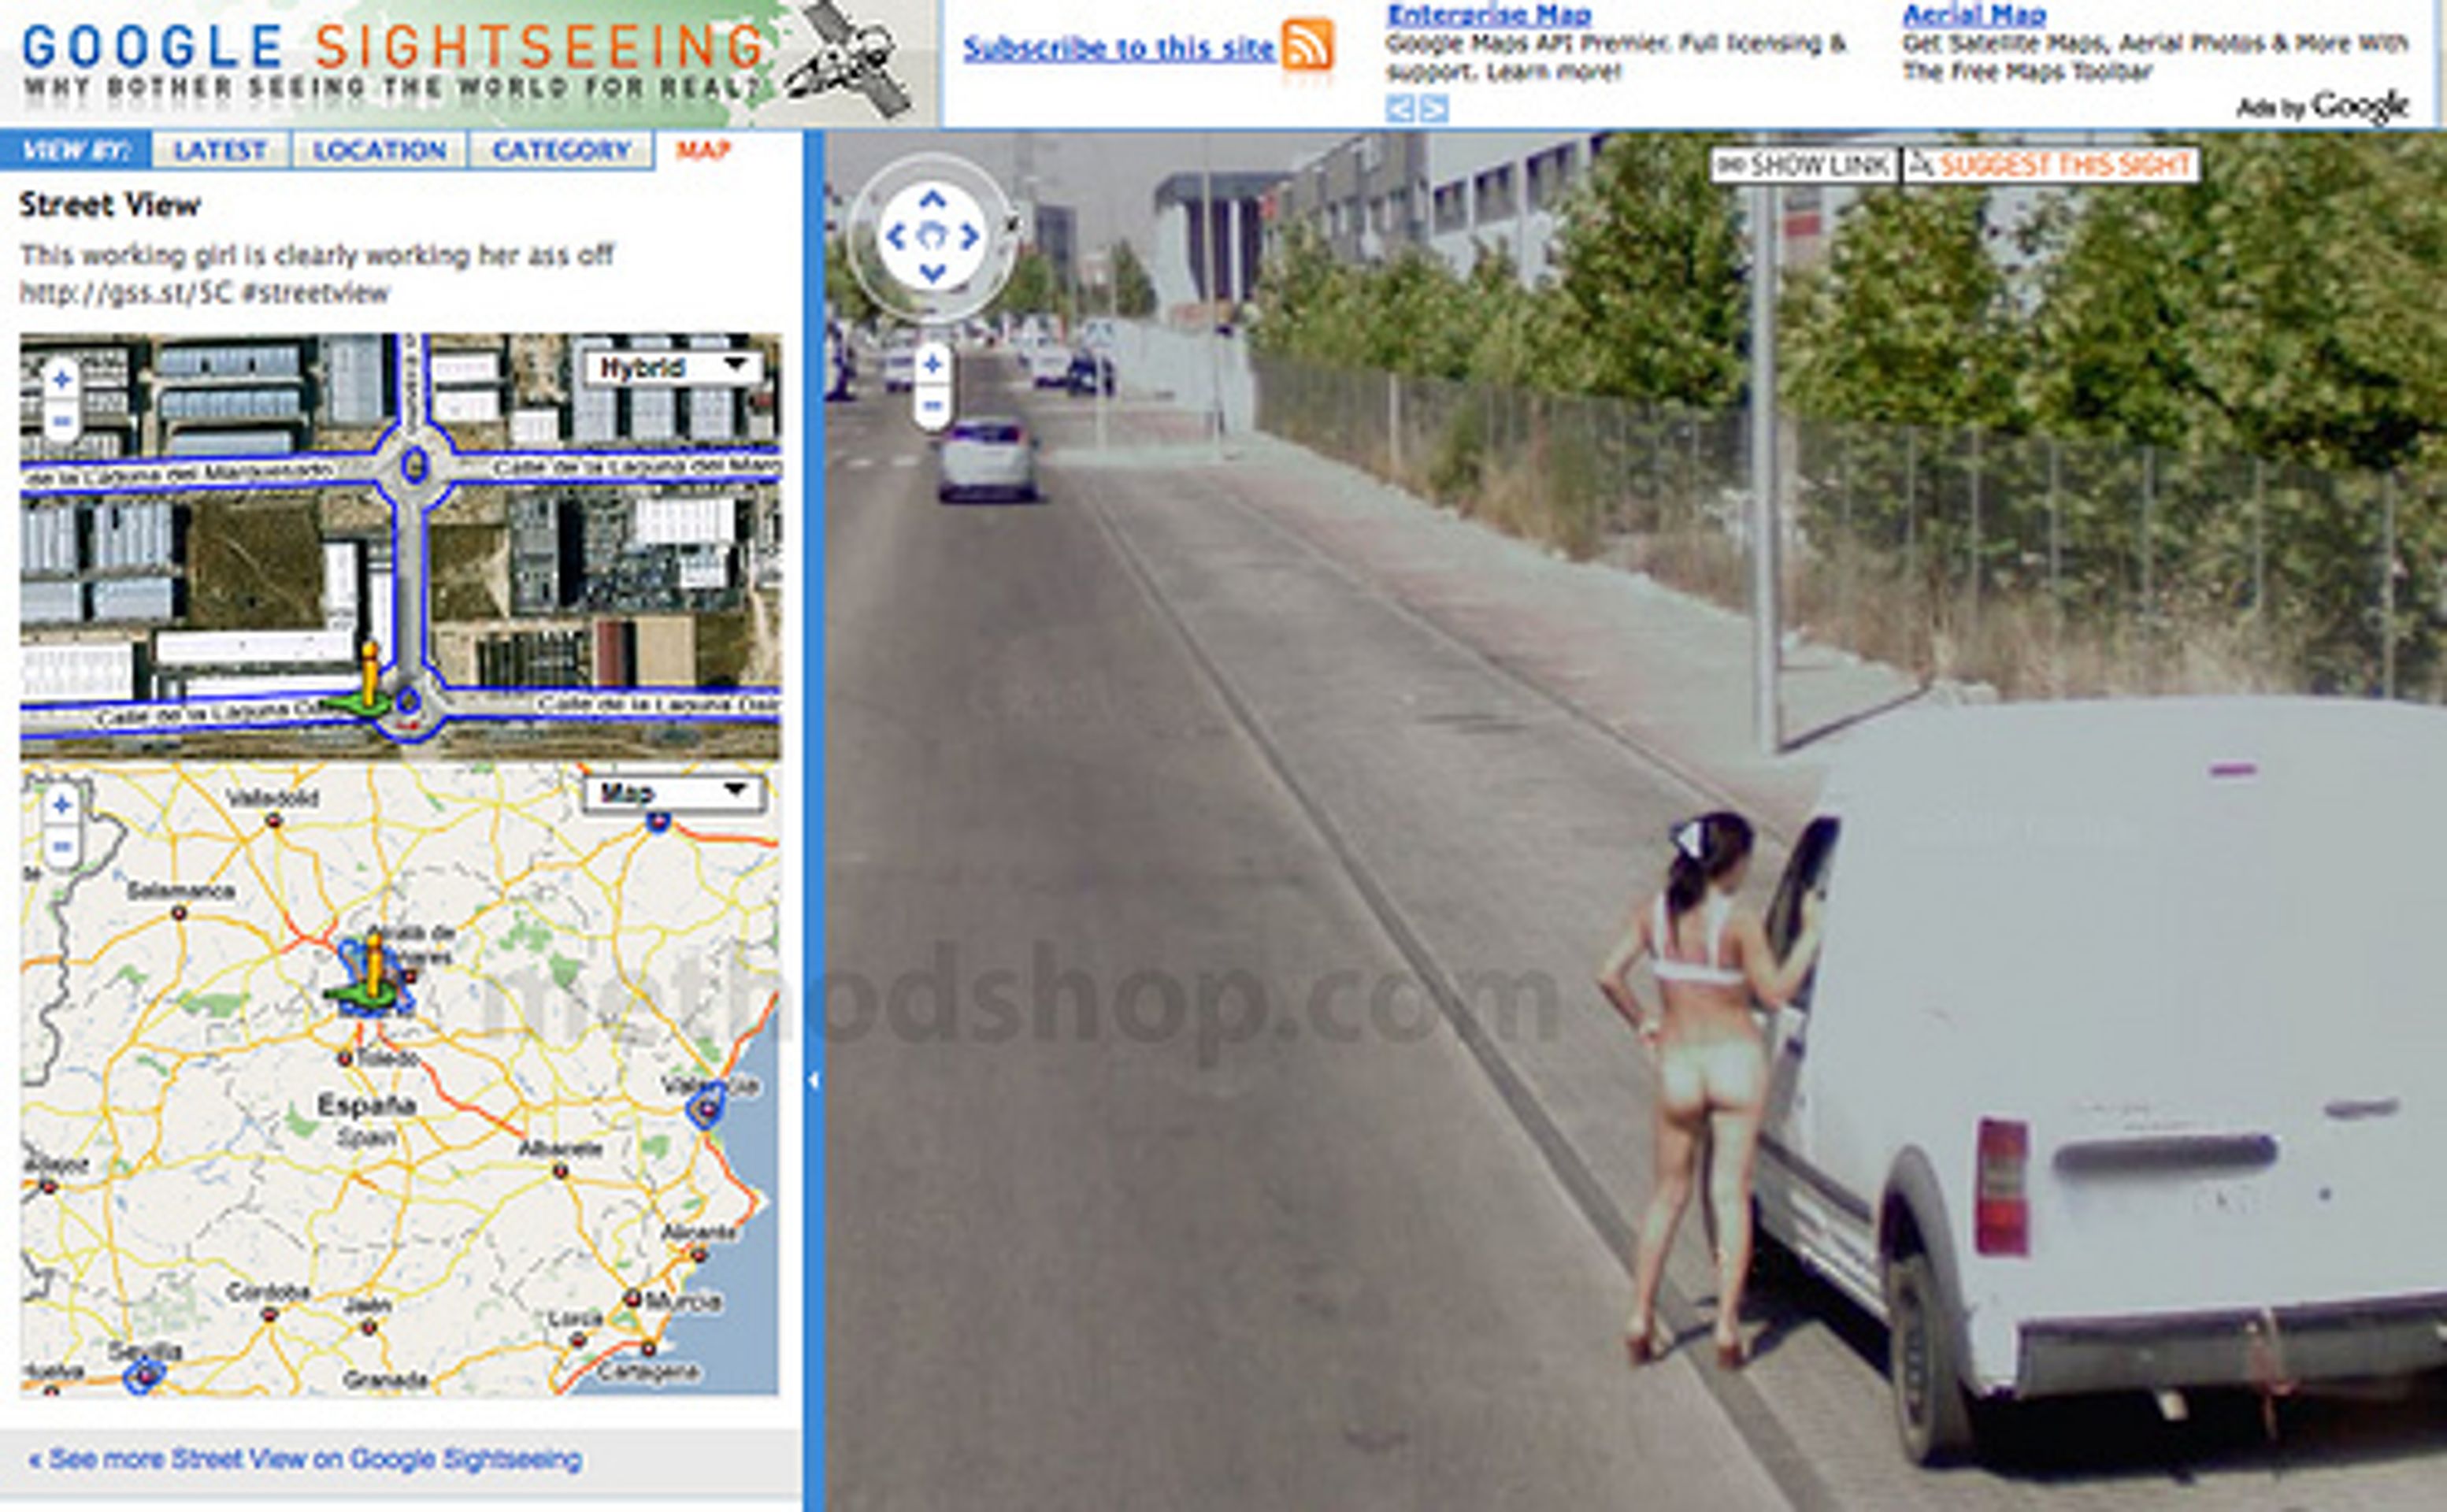 Google fotky - 4 - Choulostivé fotky Google Street View (3/6)